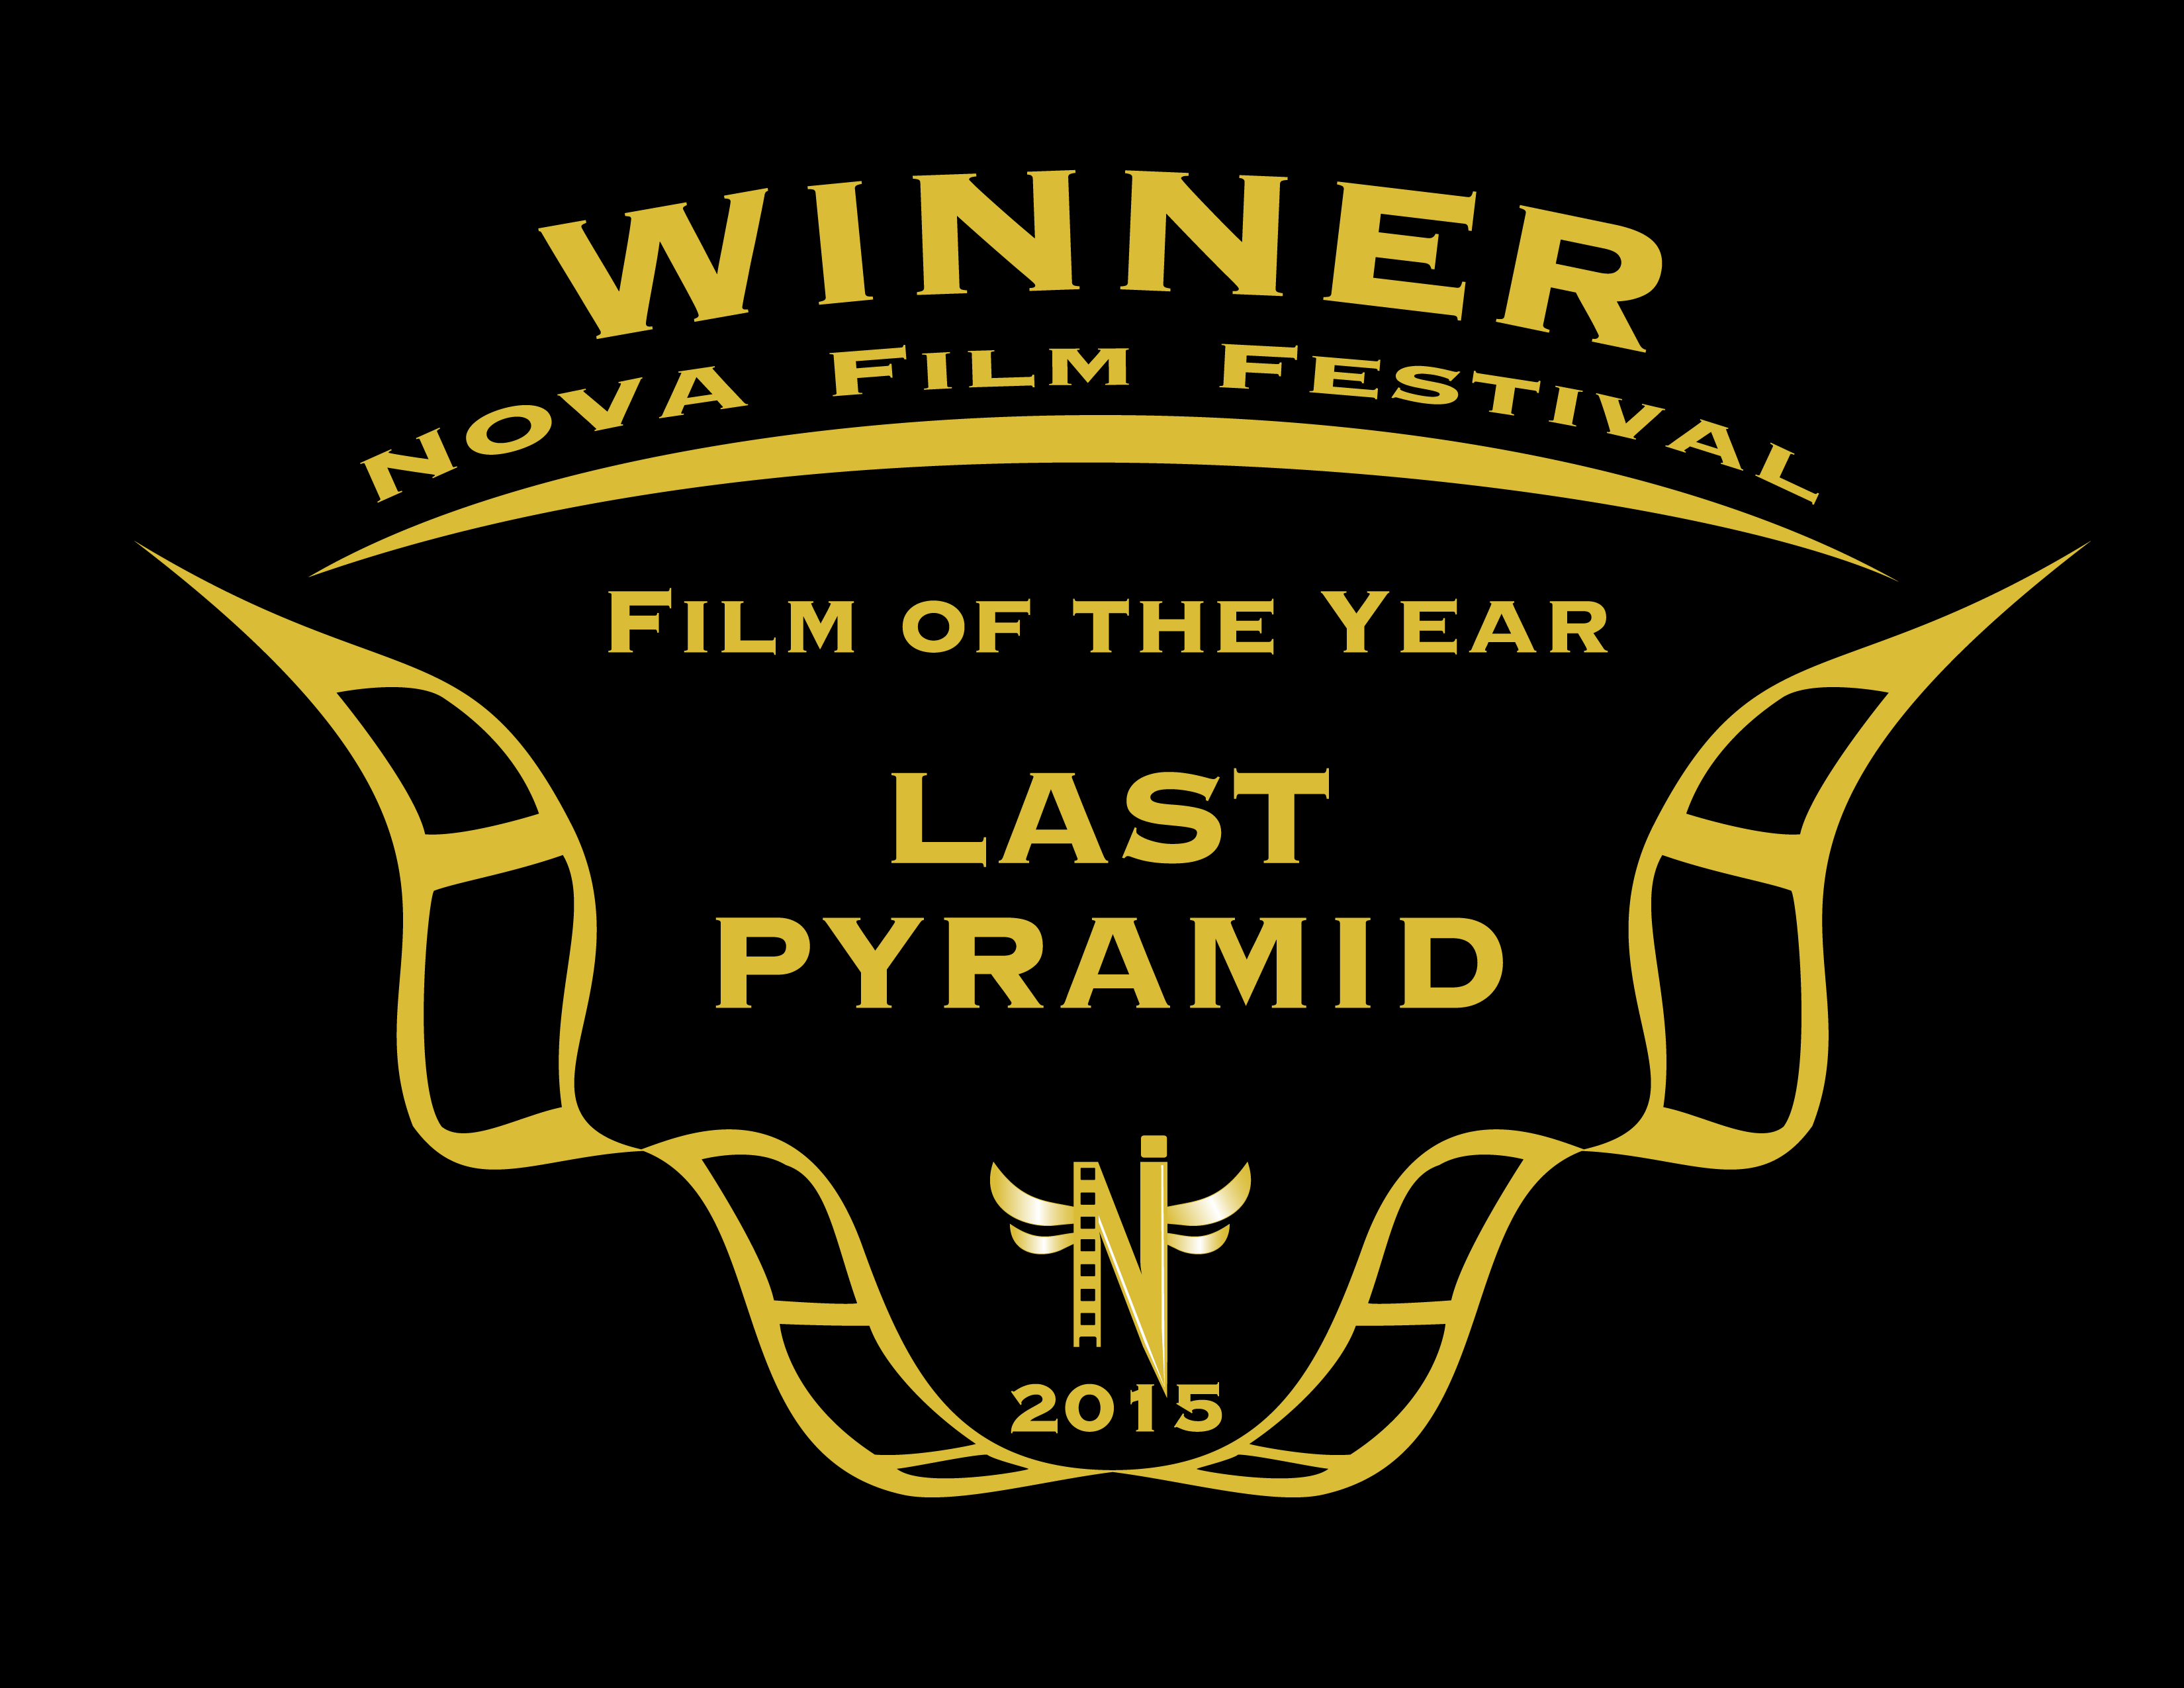 Film of the Year, Last Pyramid